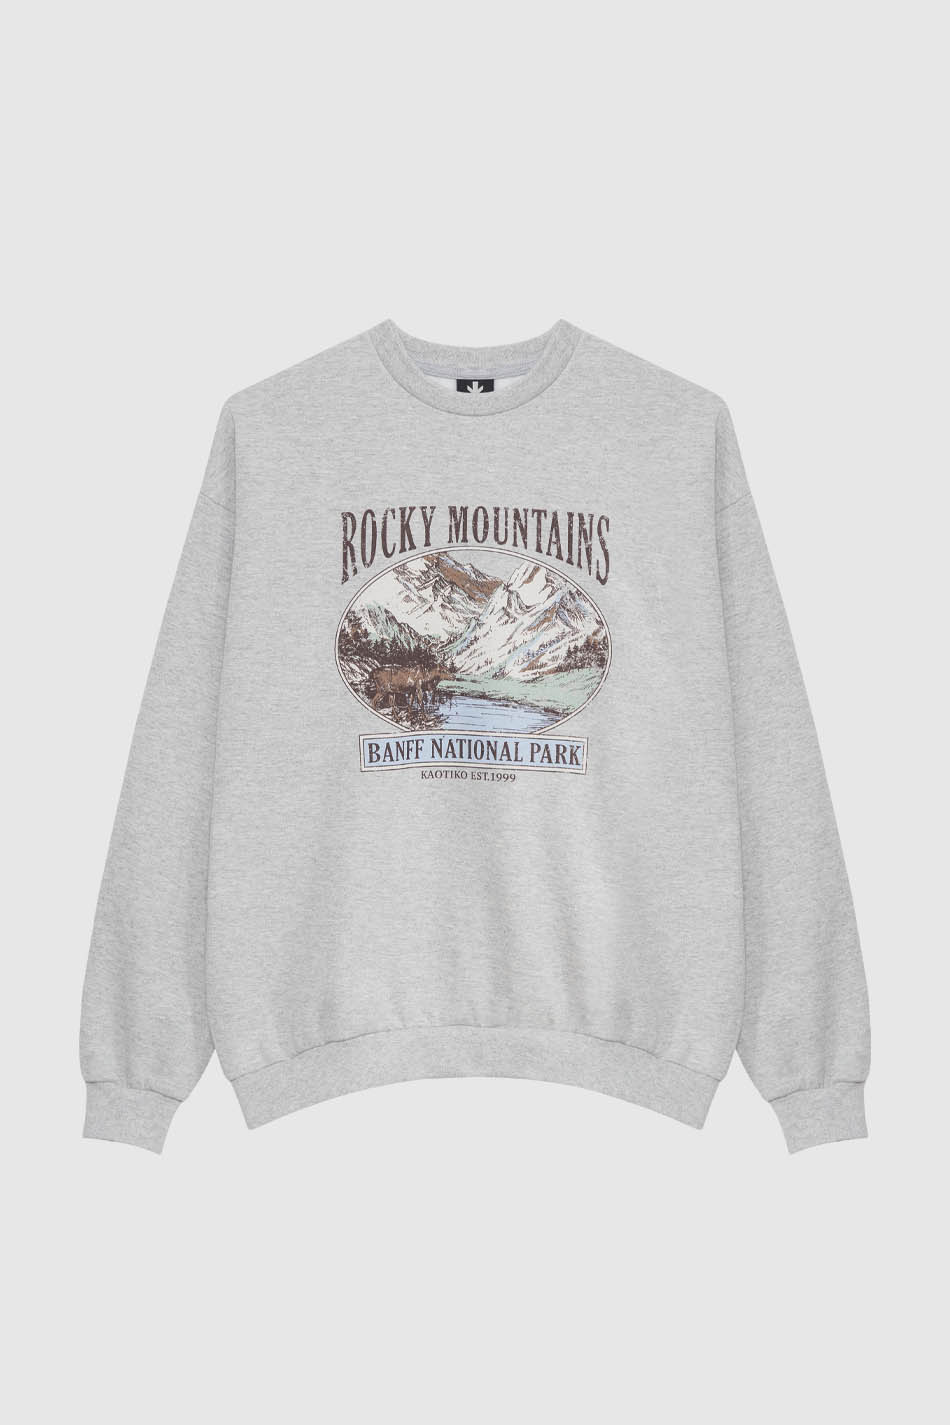 Rocks Mountains Sweatshirt